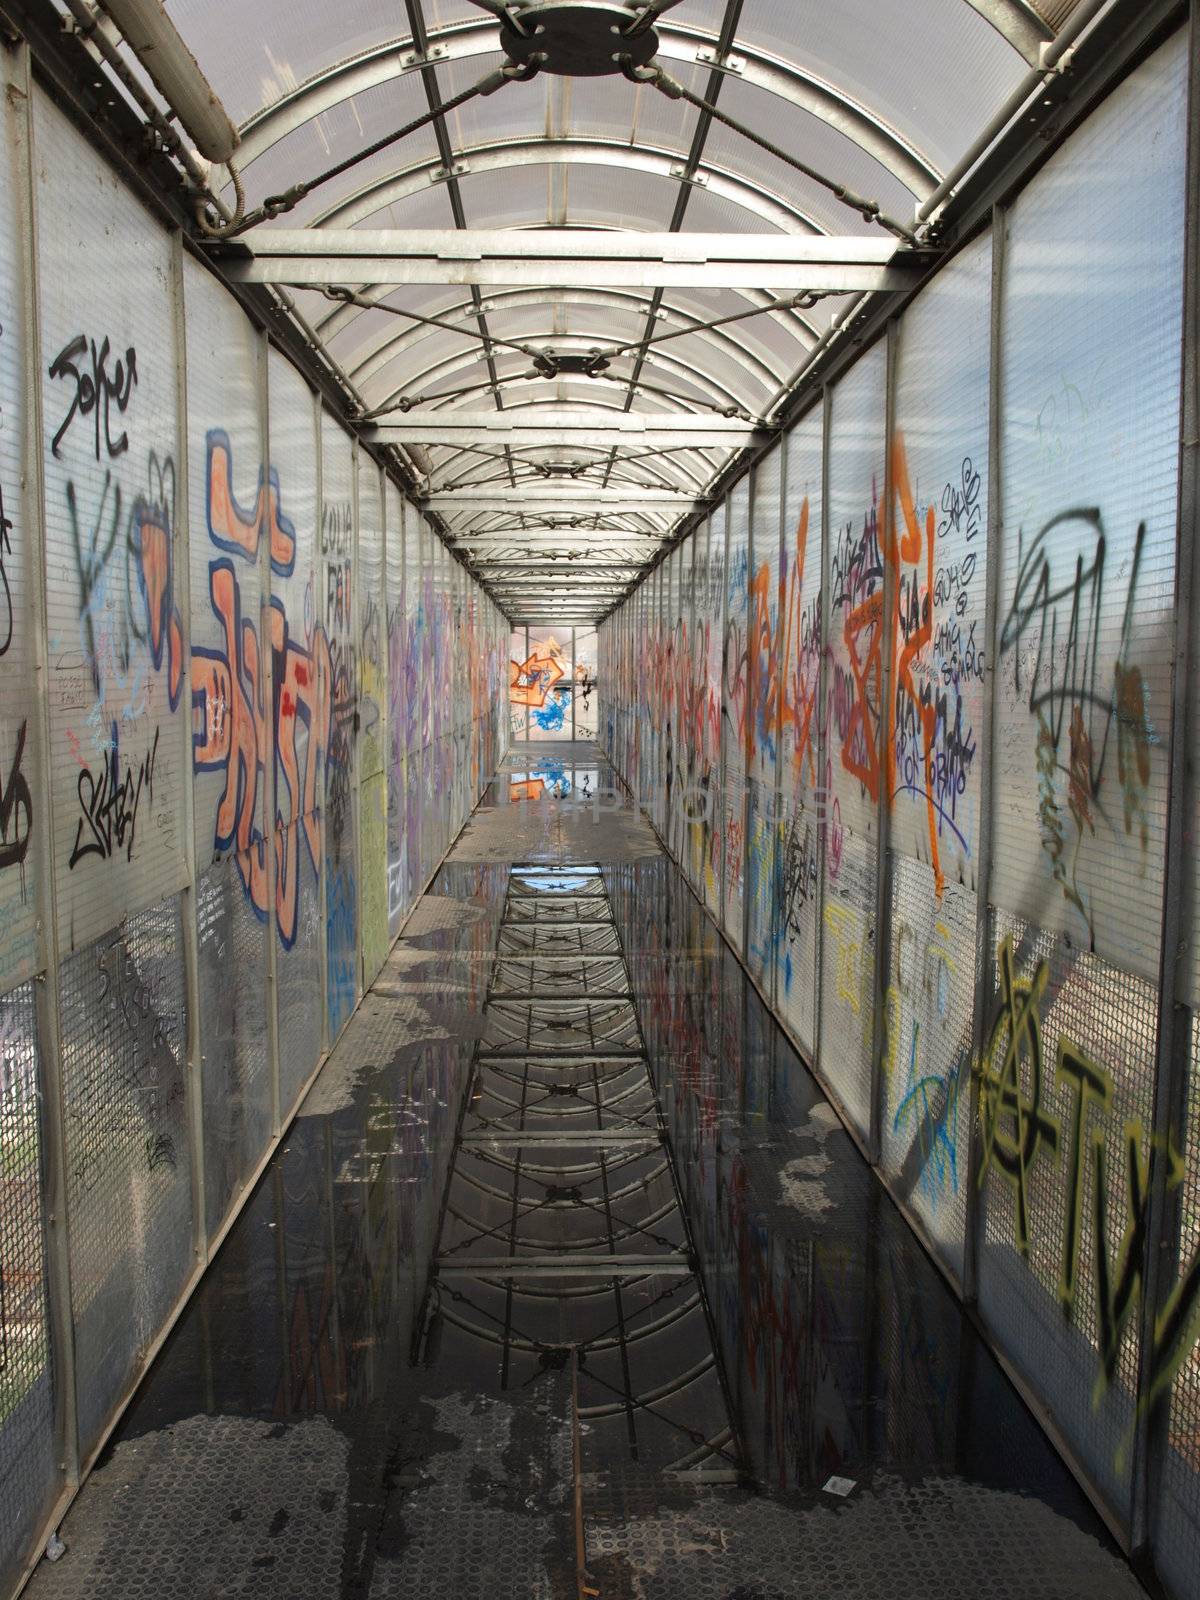 Pedestrian bridge with graffiti